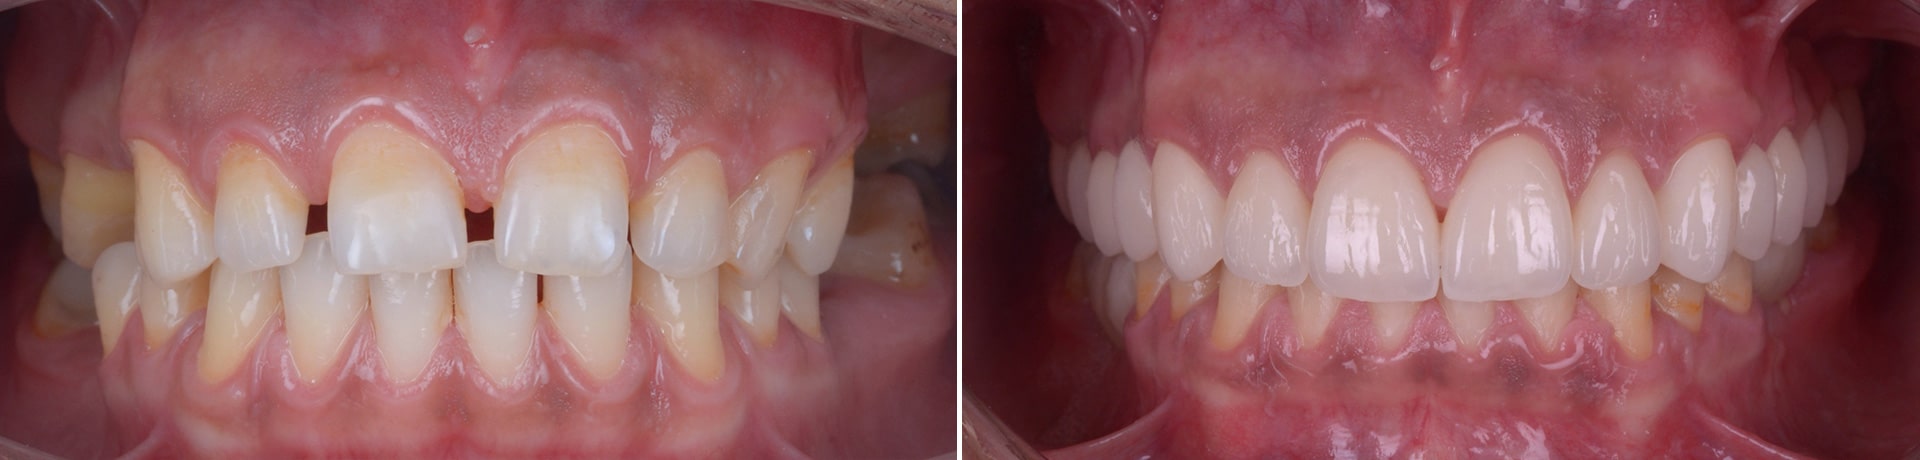 before after zambet functional cabinet stomatologie clinica dentara timisoara clinica rugina